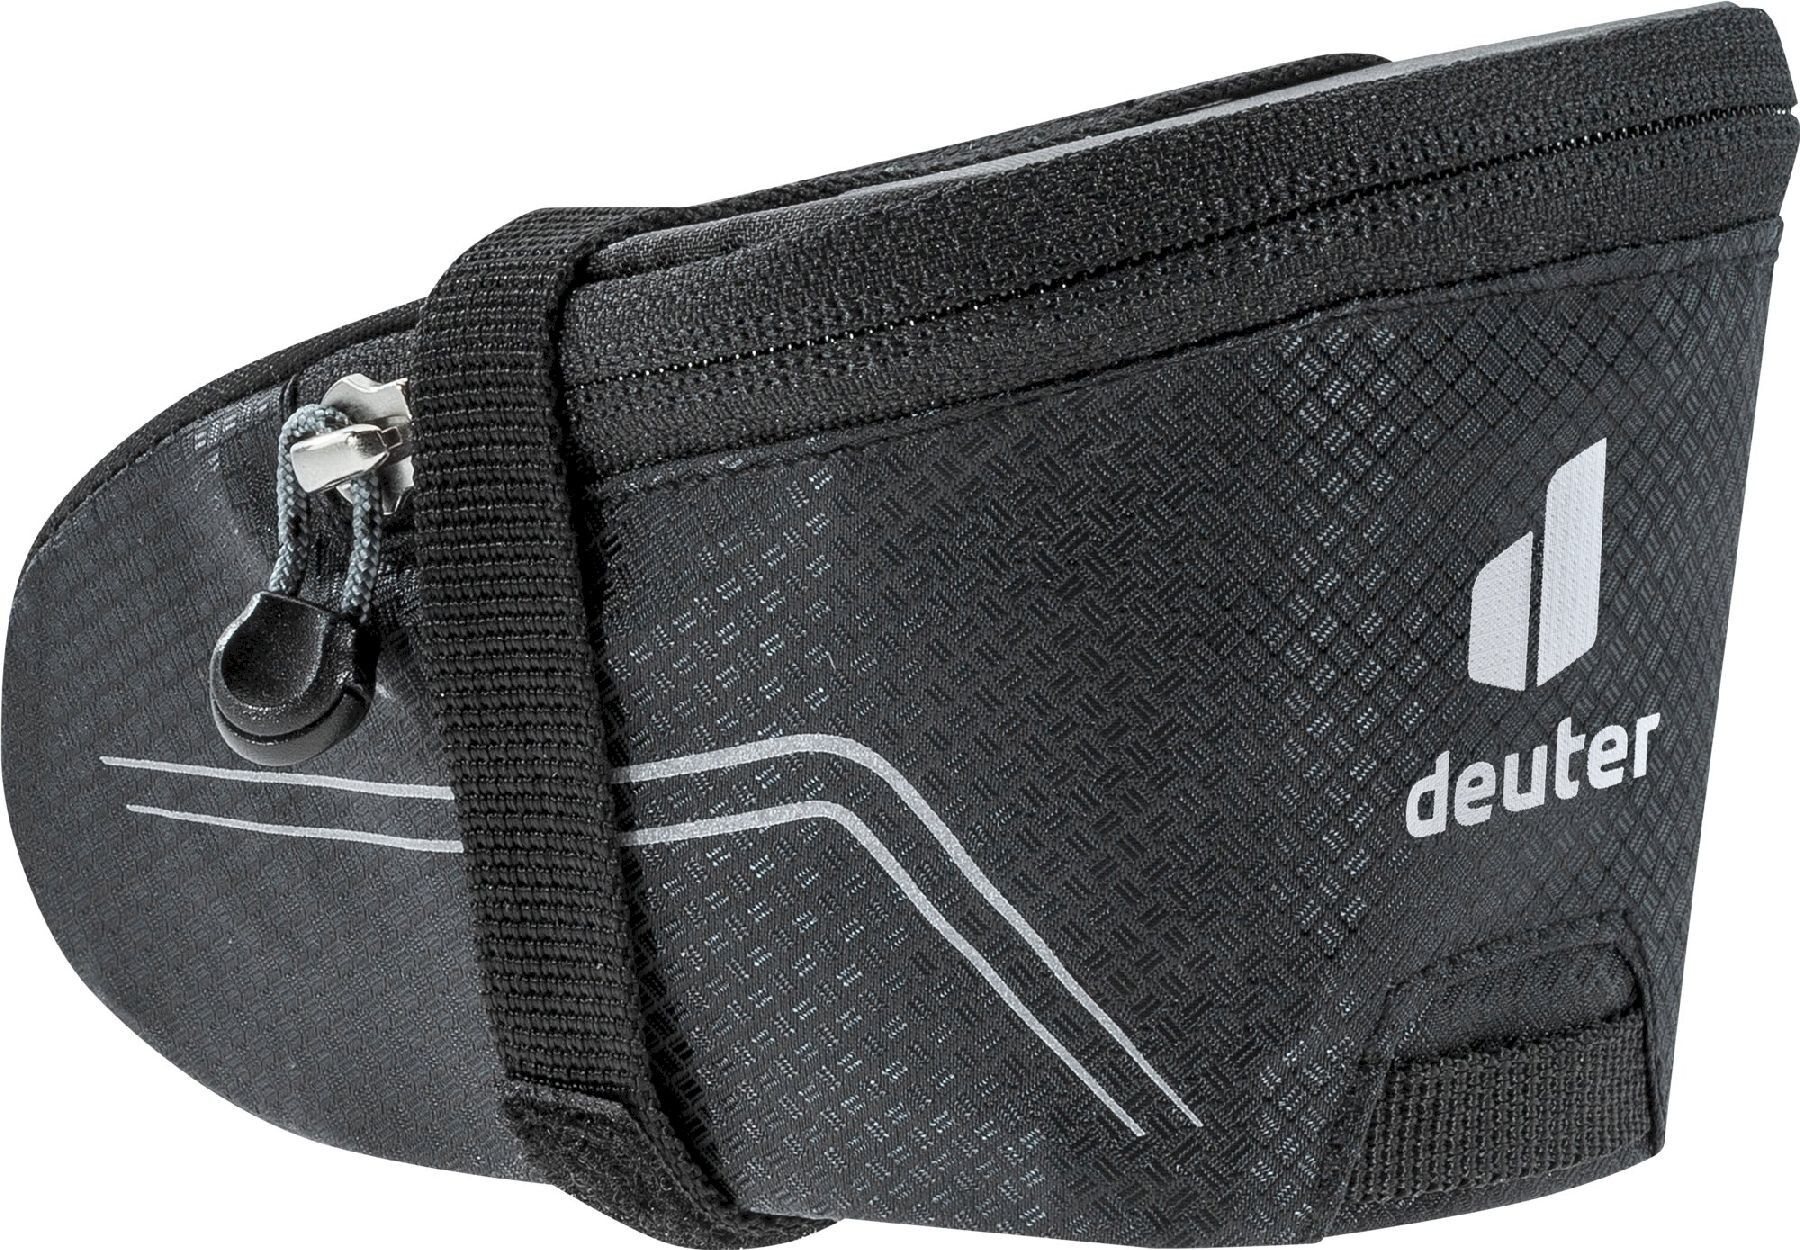 Deuter Bike Bag Race II - Bolsa herramientas bici